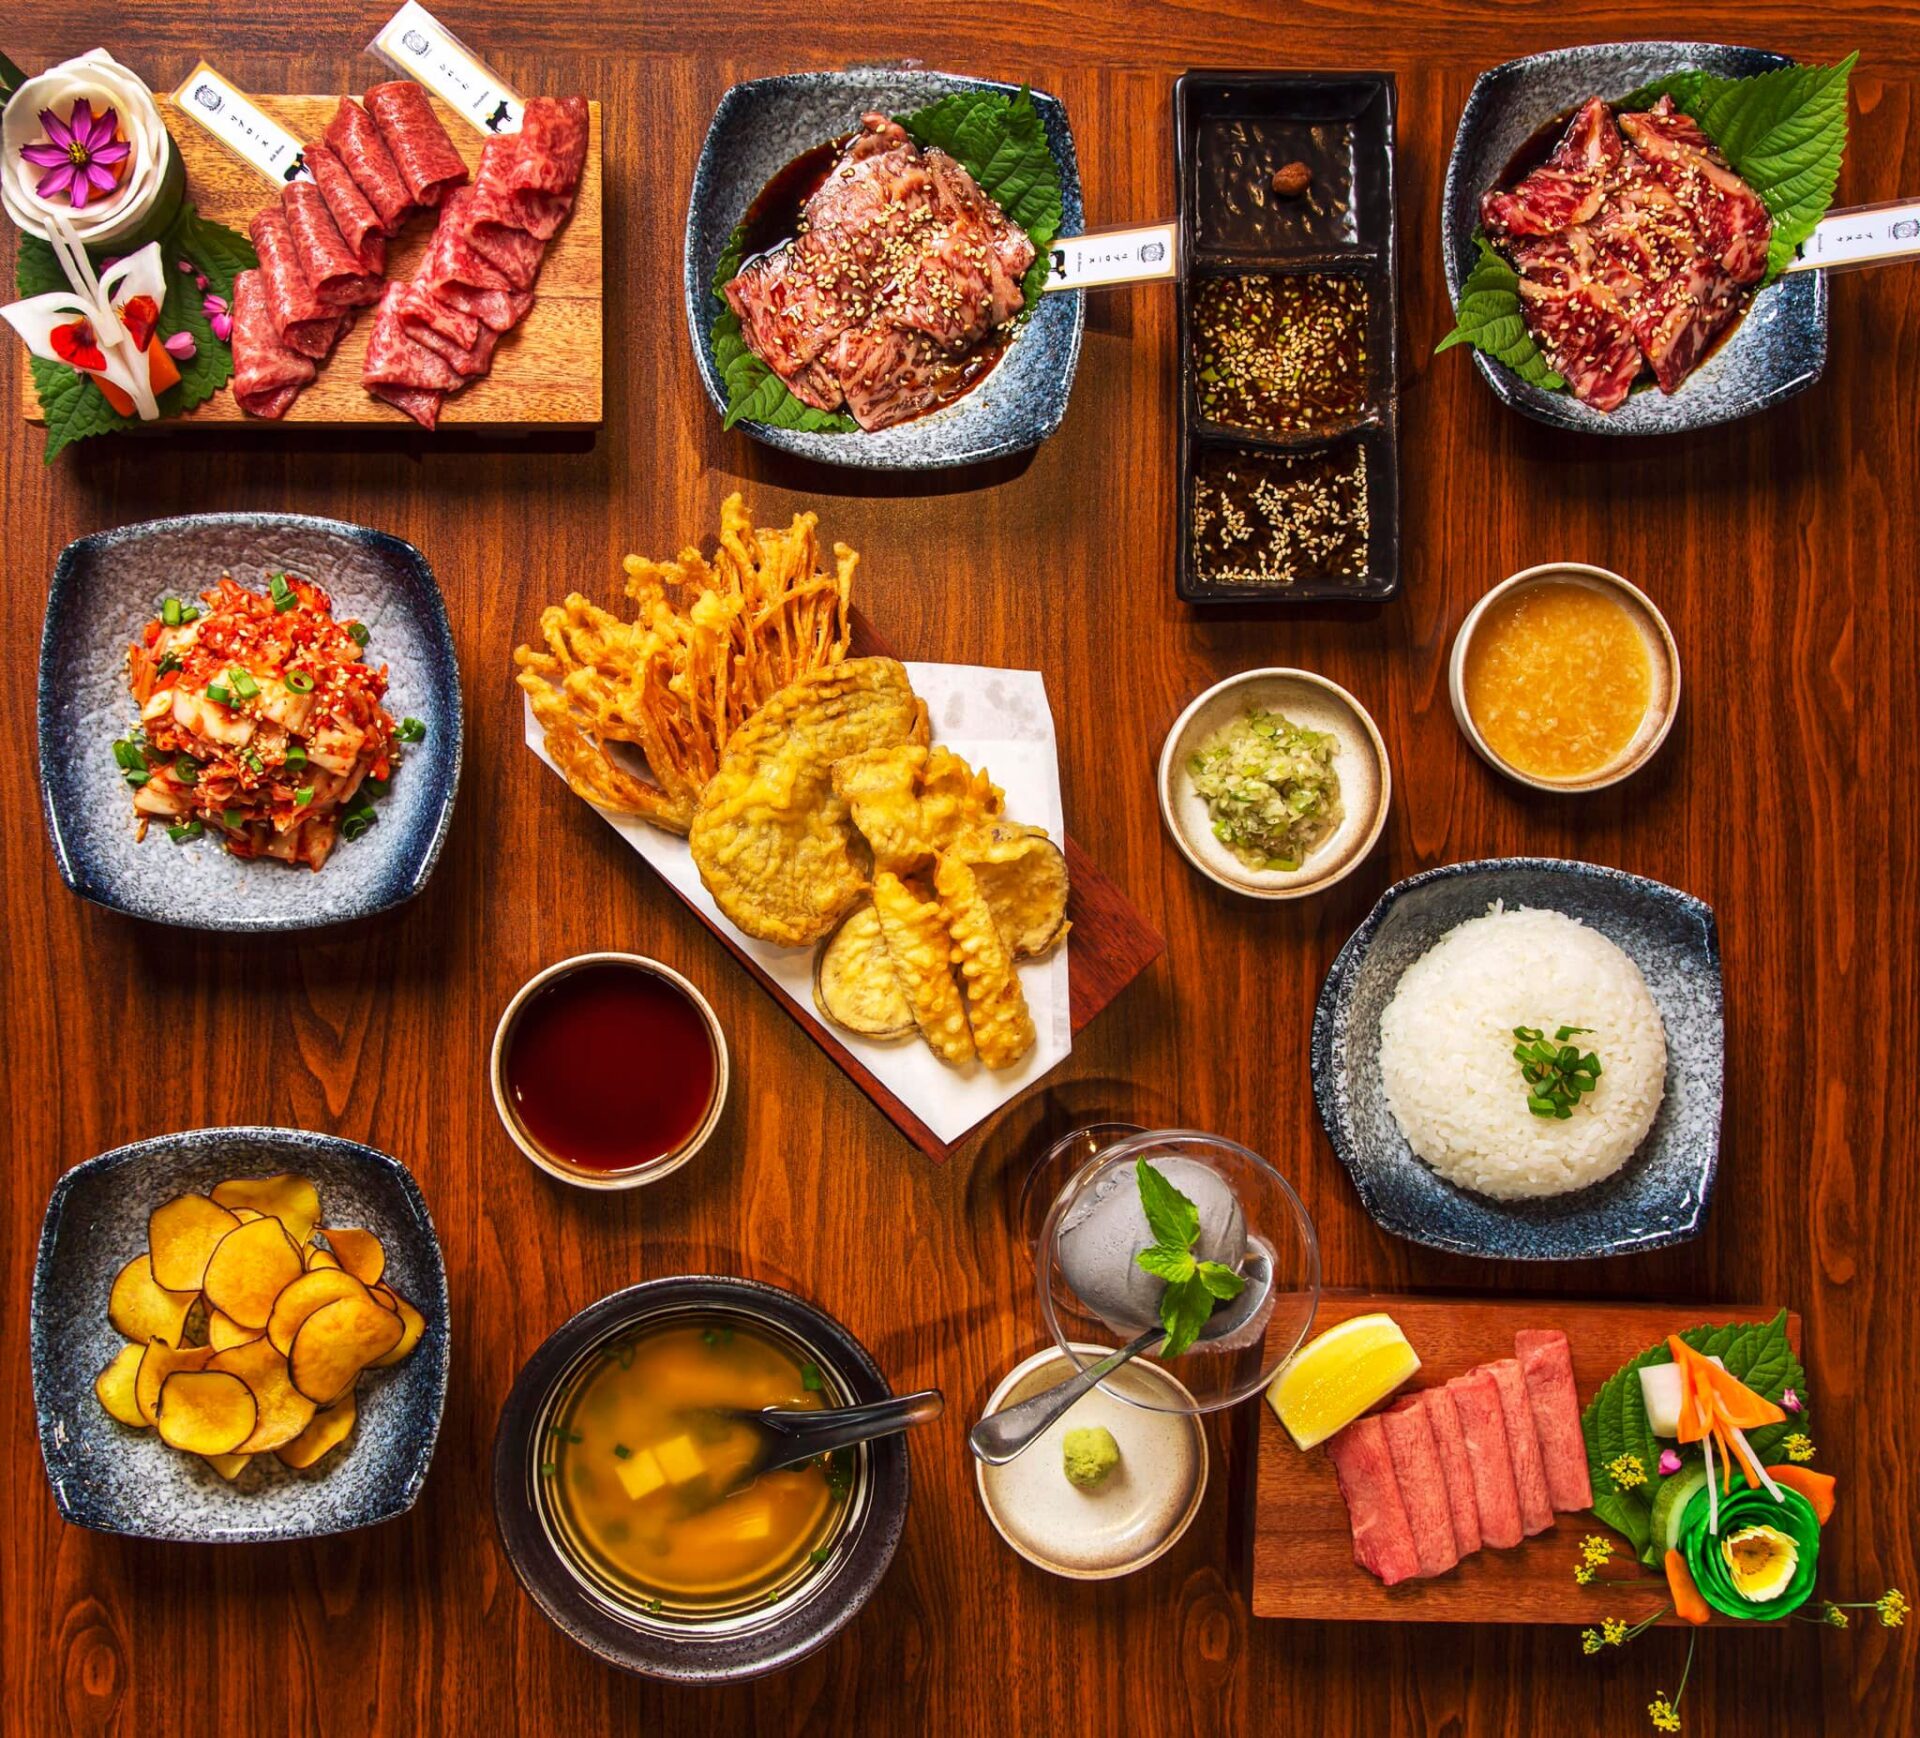 Chakuro - Table full of meats